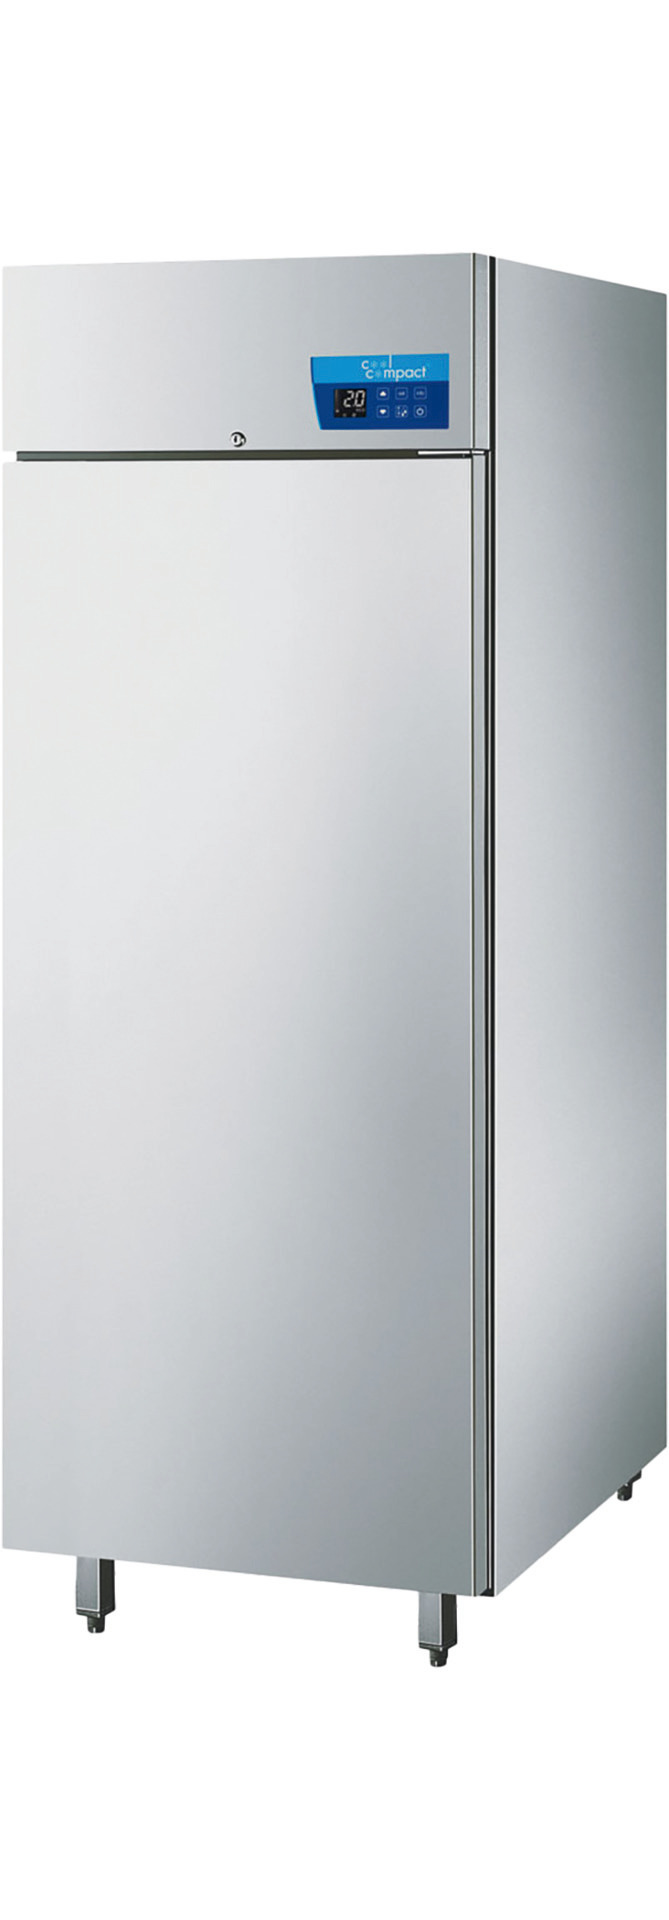 Umluft-Kühlschrank 21 x GN 1/1 / zentralgekühlt